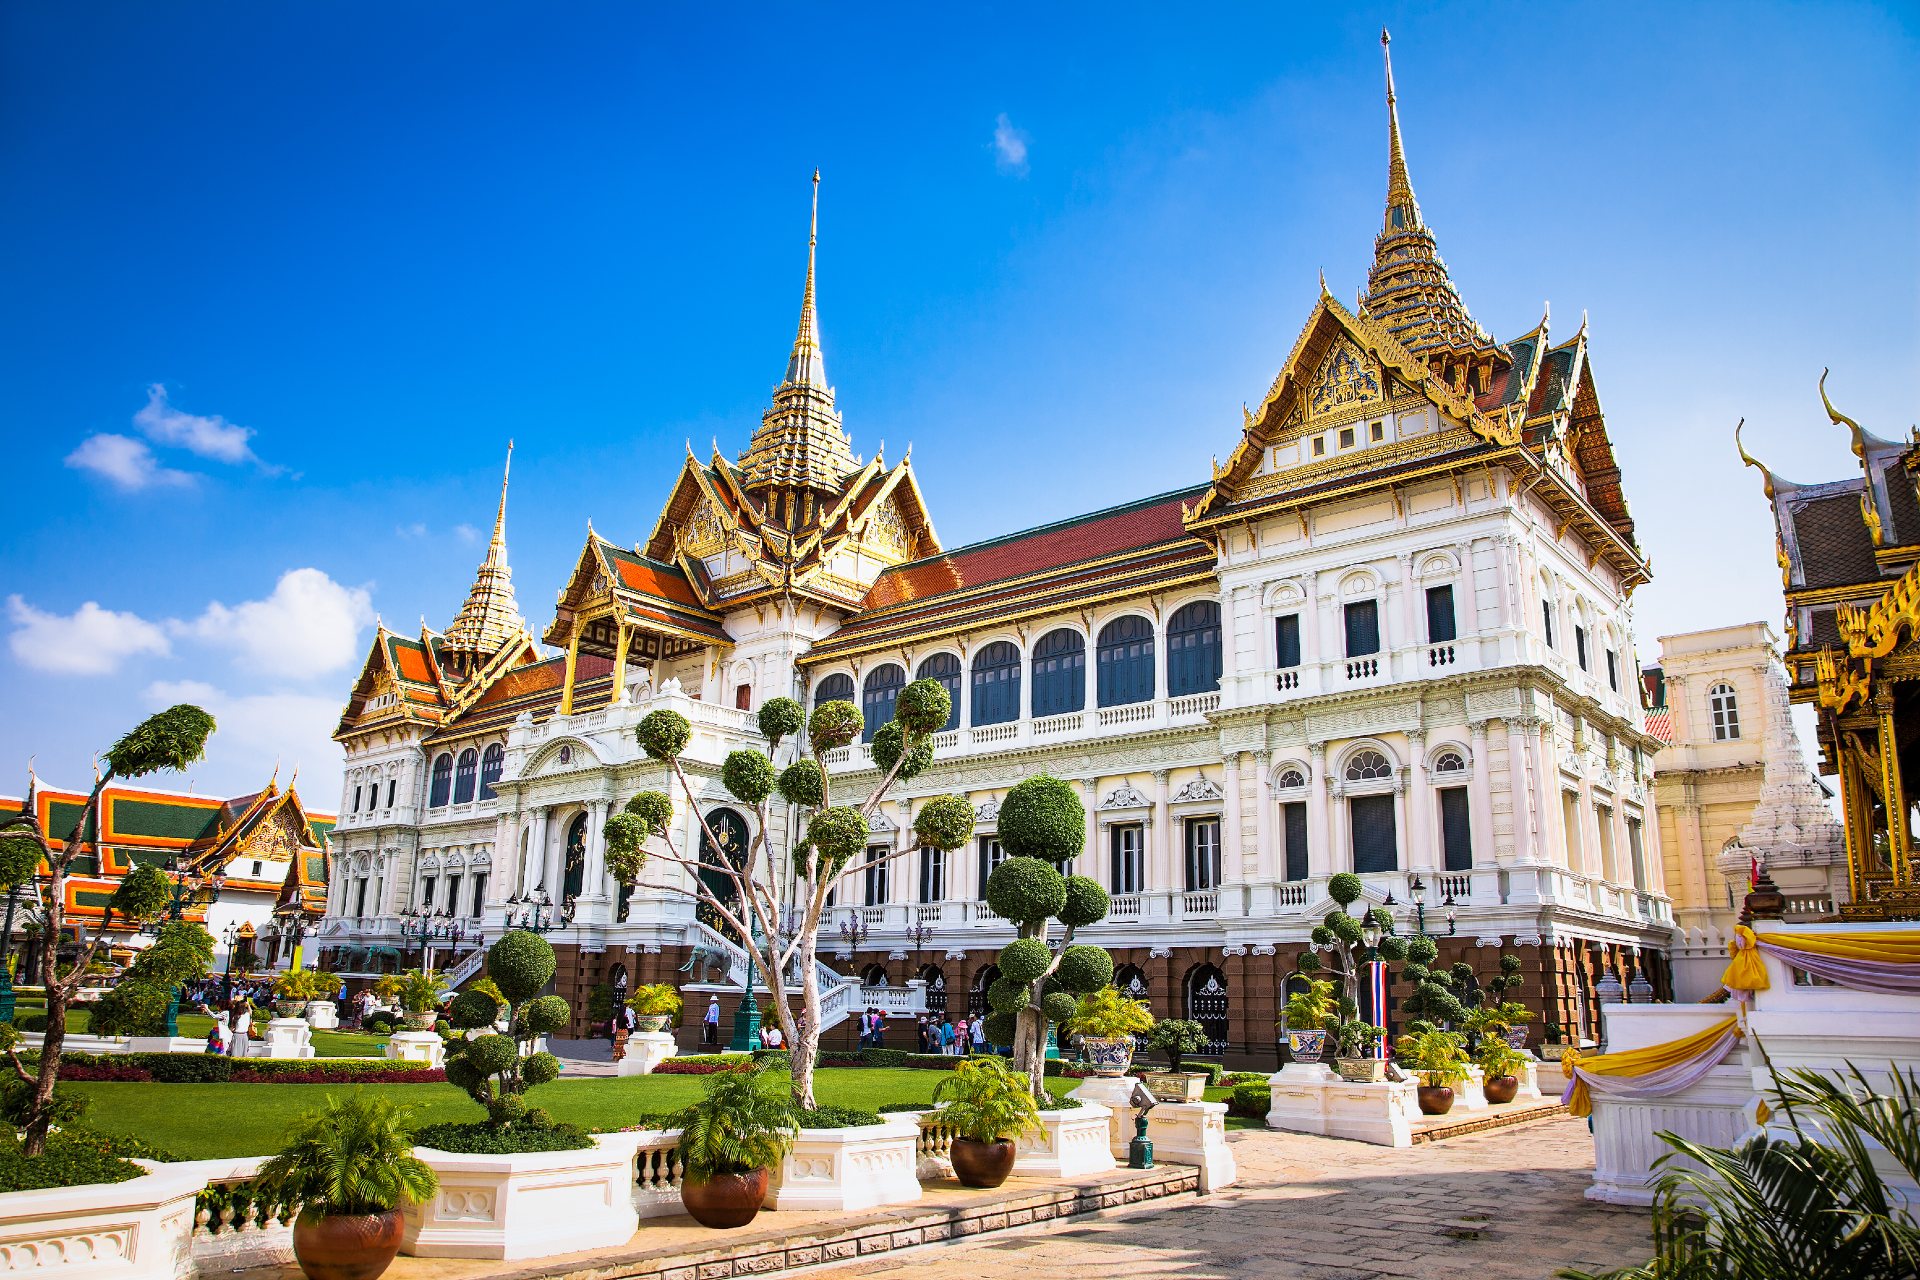 The Grand Palace in Bangkok, Thailand, under summer blue sky